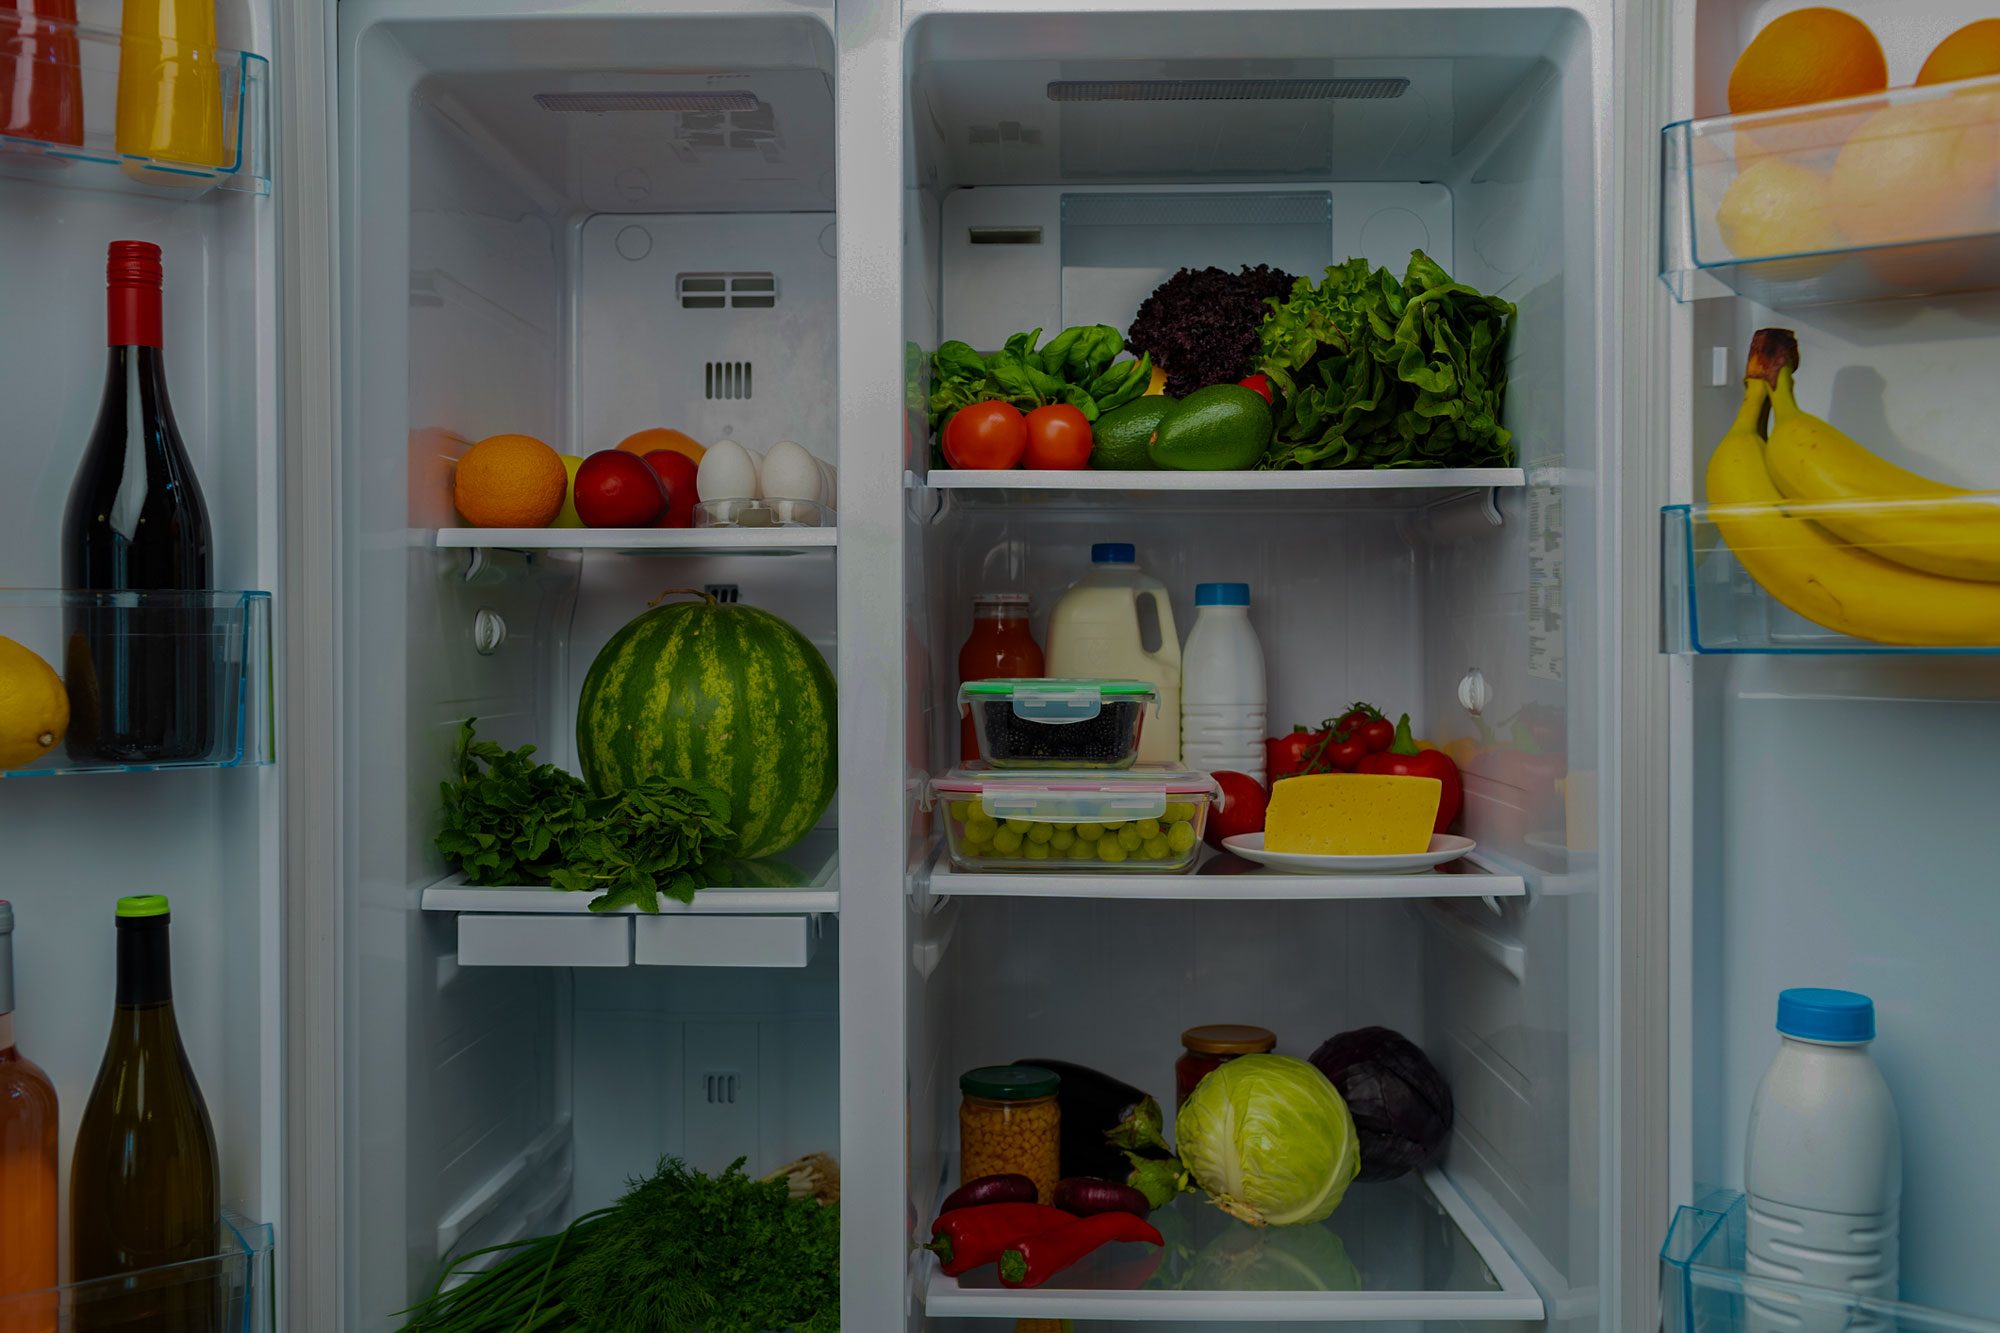 Is your fridge too hot?